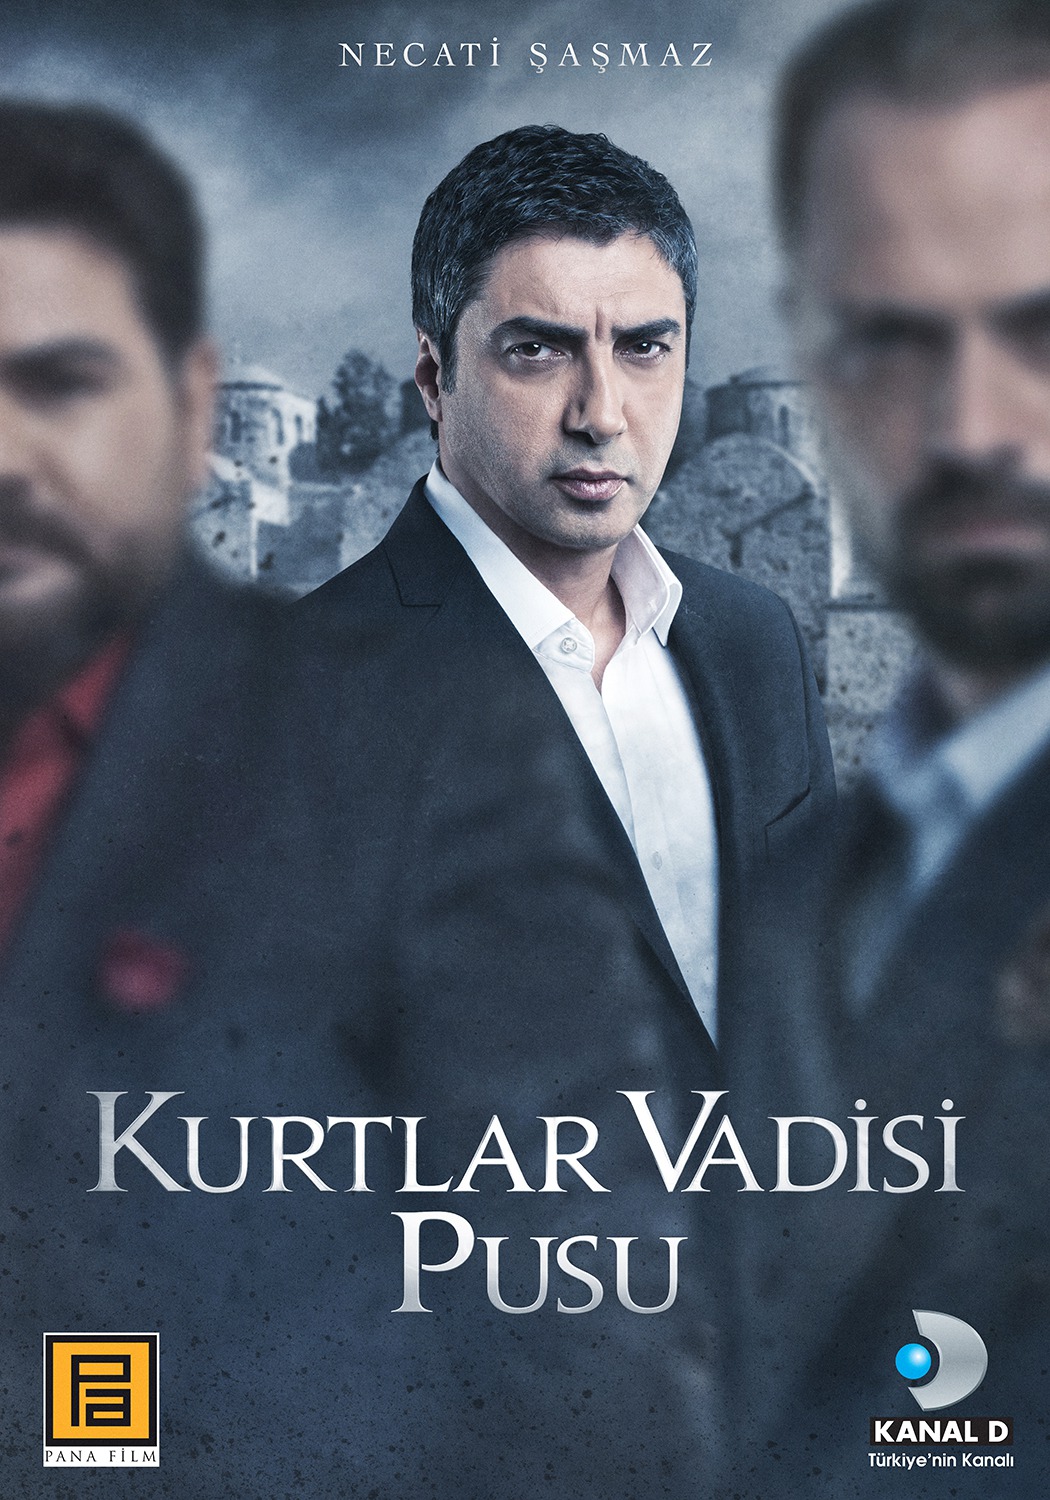 Extra Large TV Poster Image for Kurtlar Vadisi Pusu 